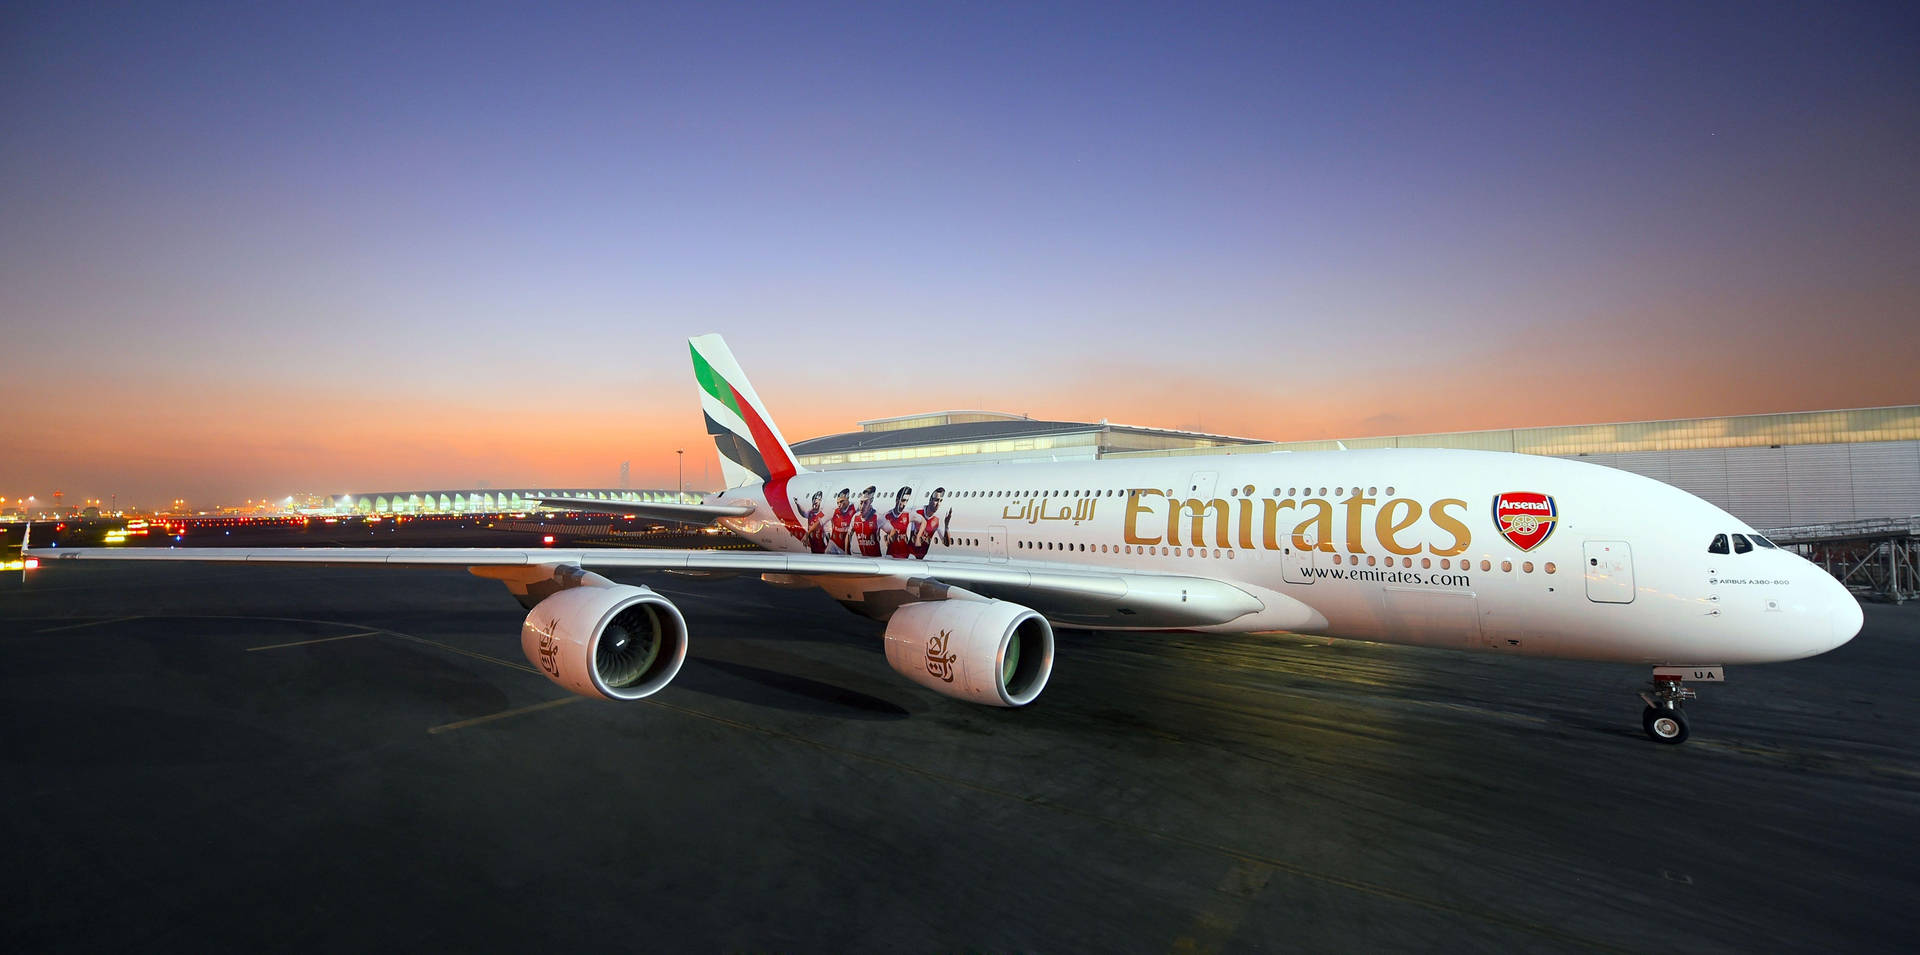 Emiratesarsenal Flygplansmodell Wallpaper